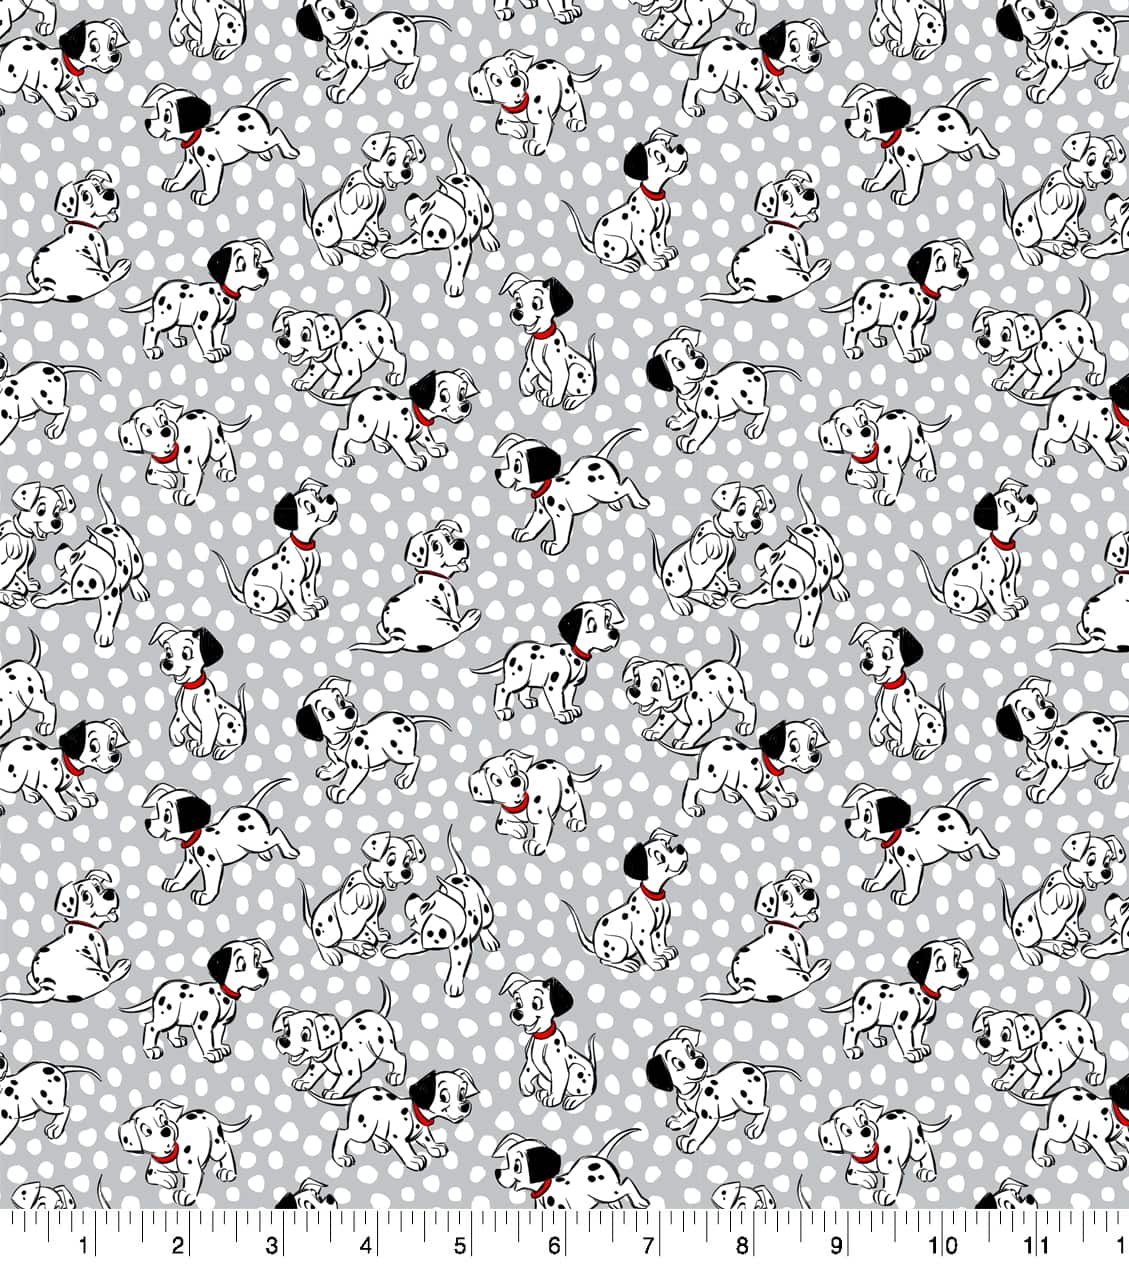 101 Dalmatians Fabric Disney Fabric